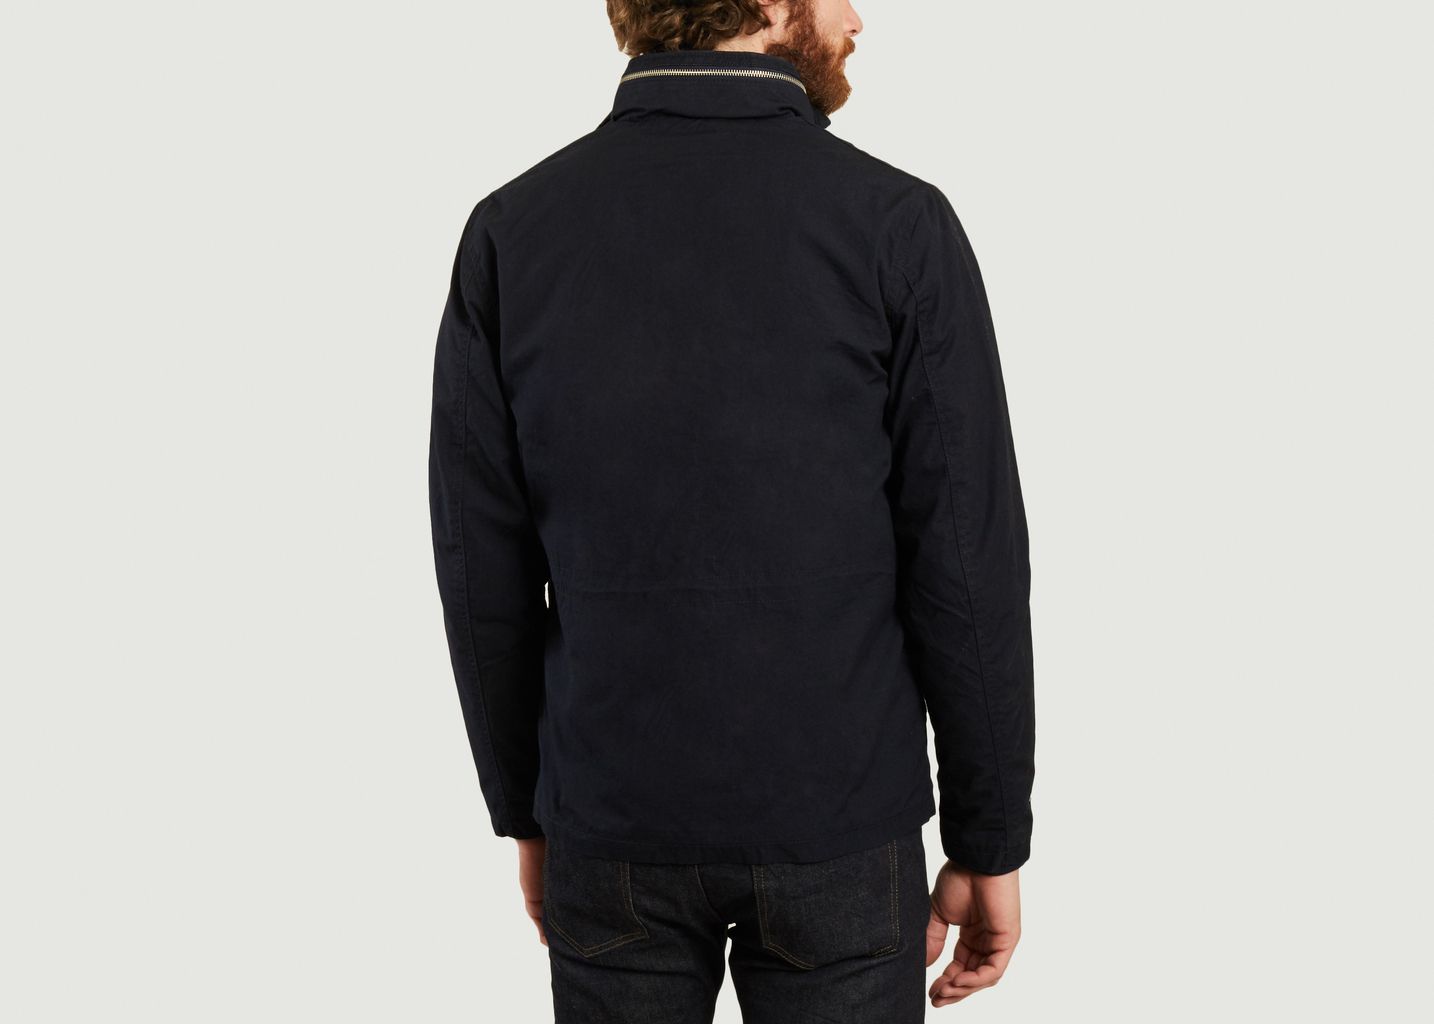 Fielda 2 canvas jacket with pockets - Schott NYC